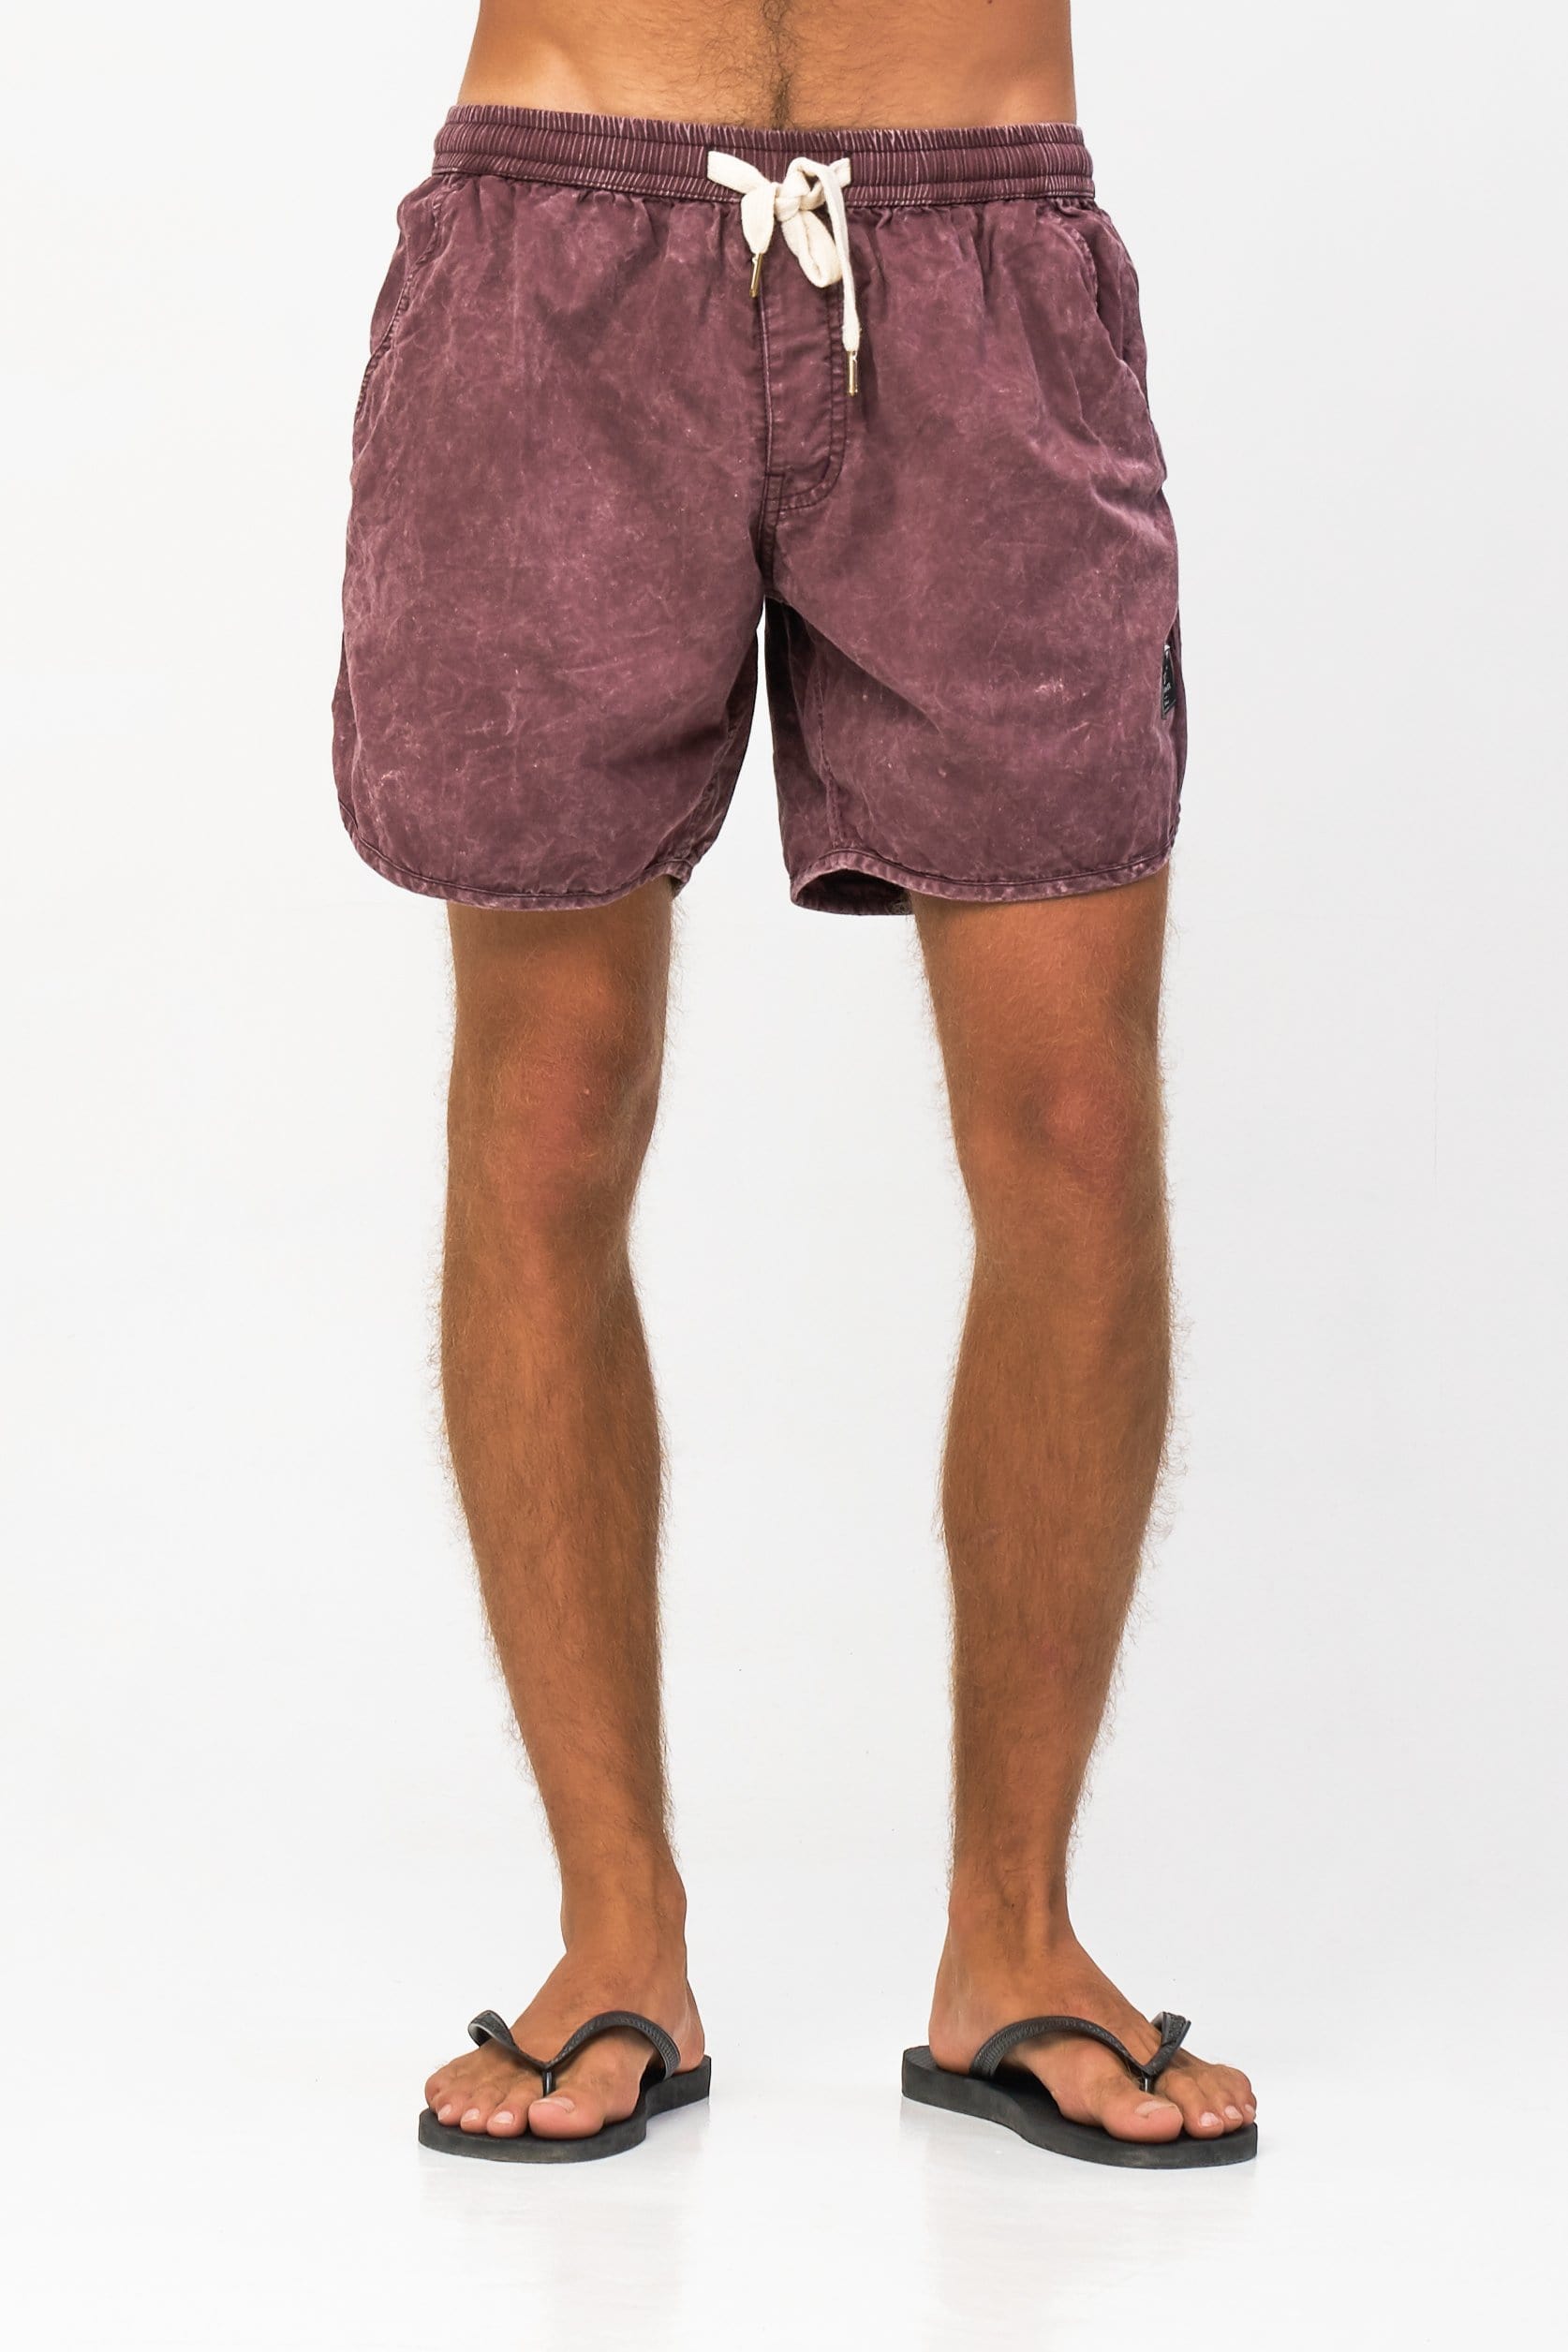 Wholesale Basic Boardshort - Man Short - LOST IN PARADISE